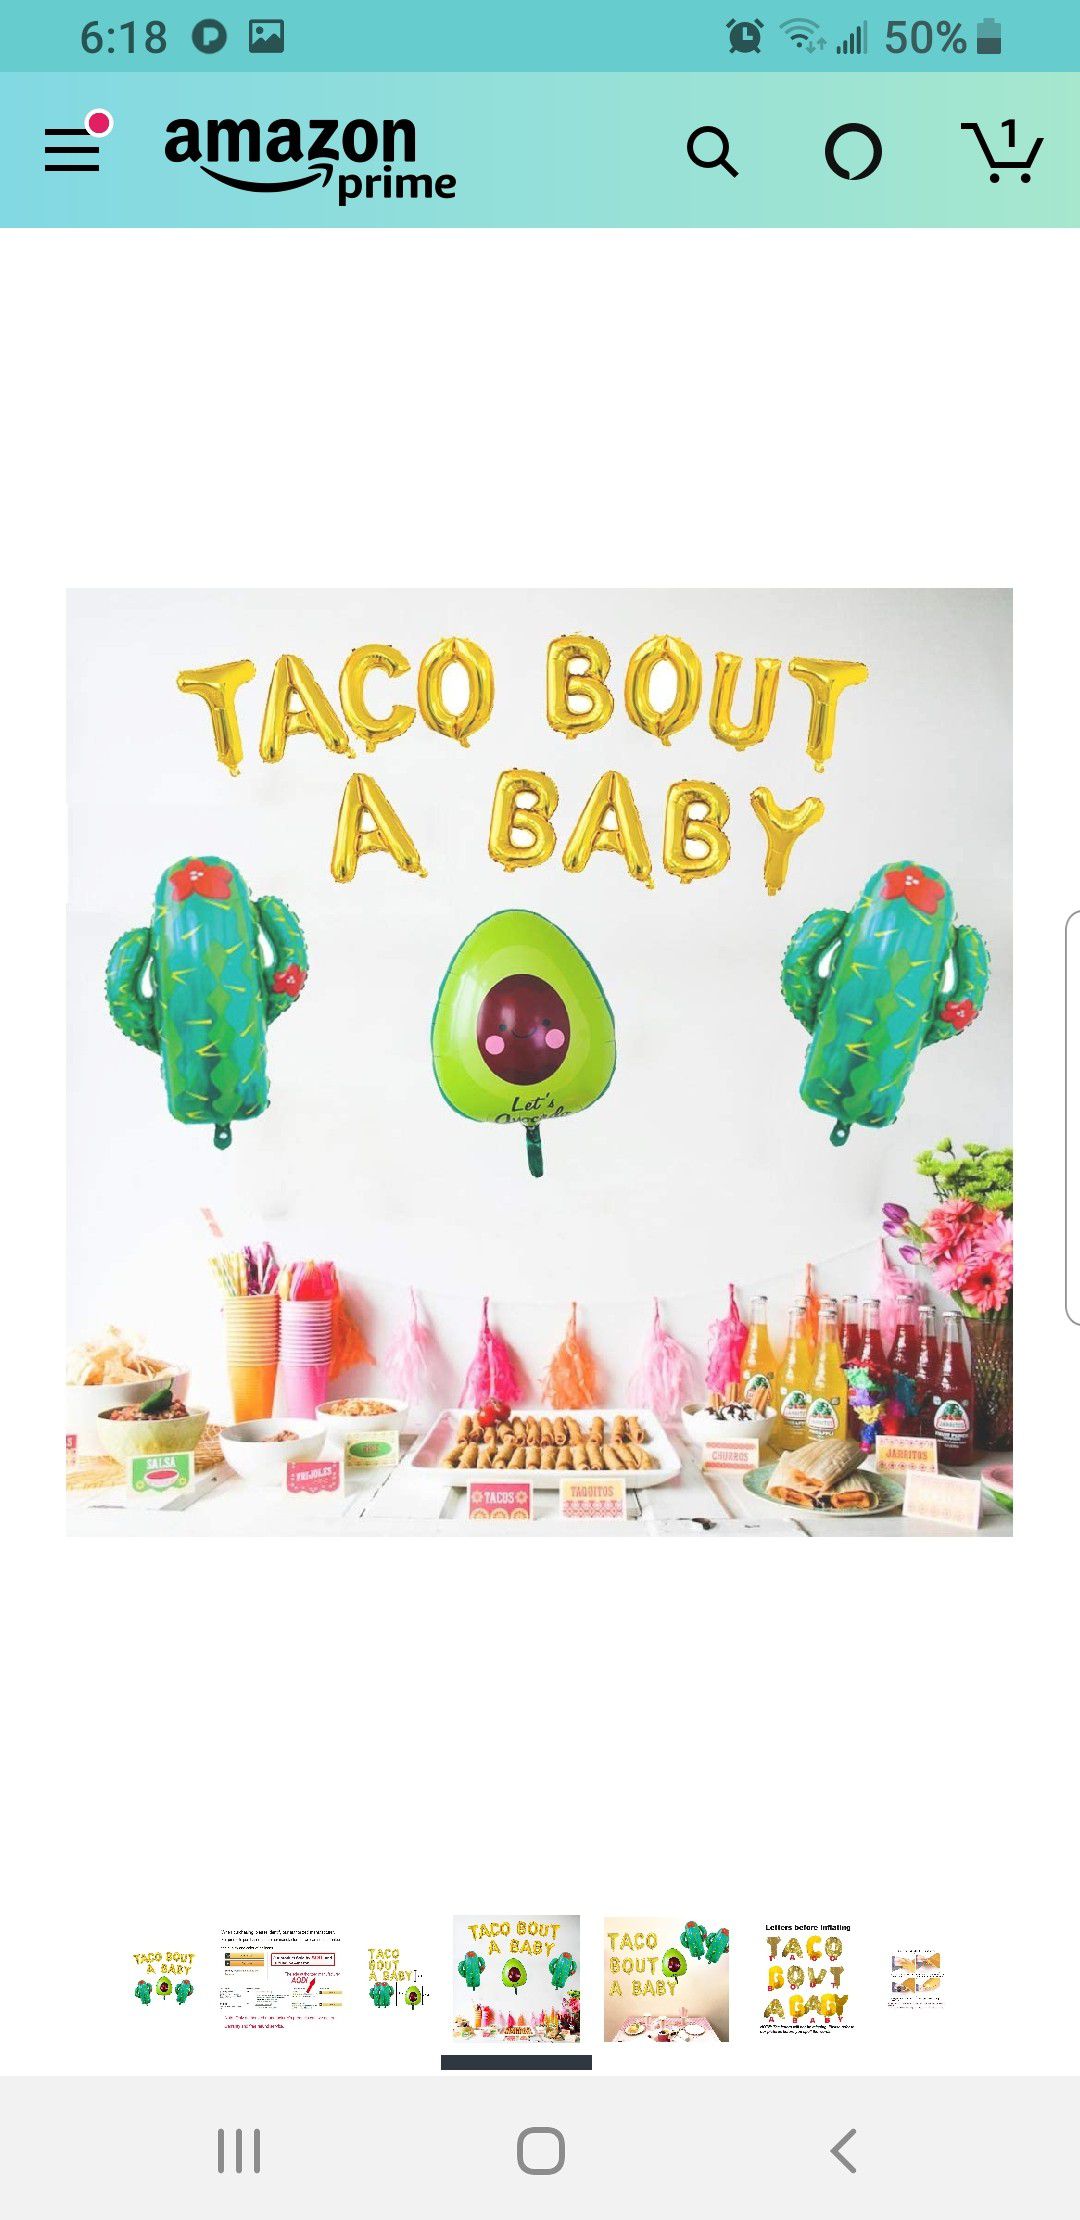 Taco bout a baby balloon set